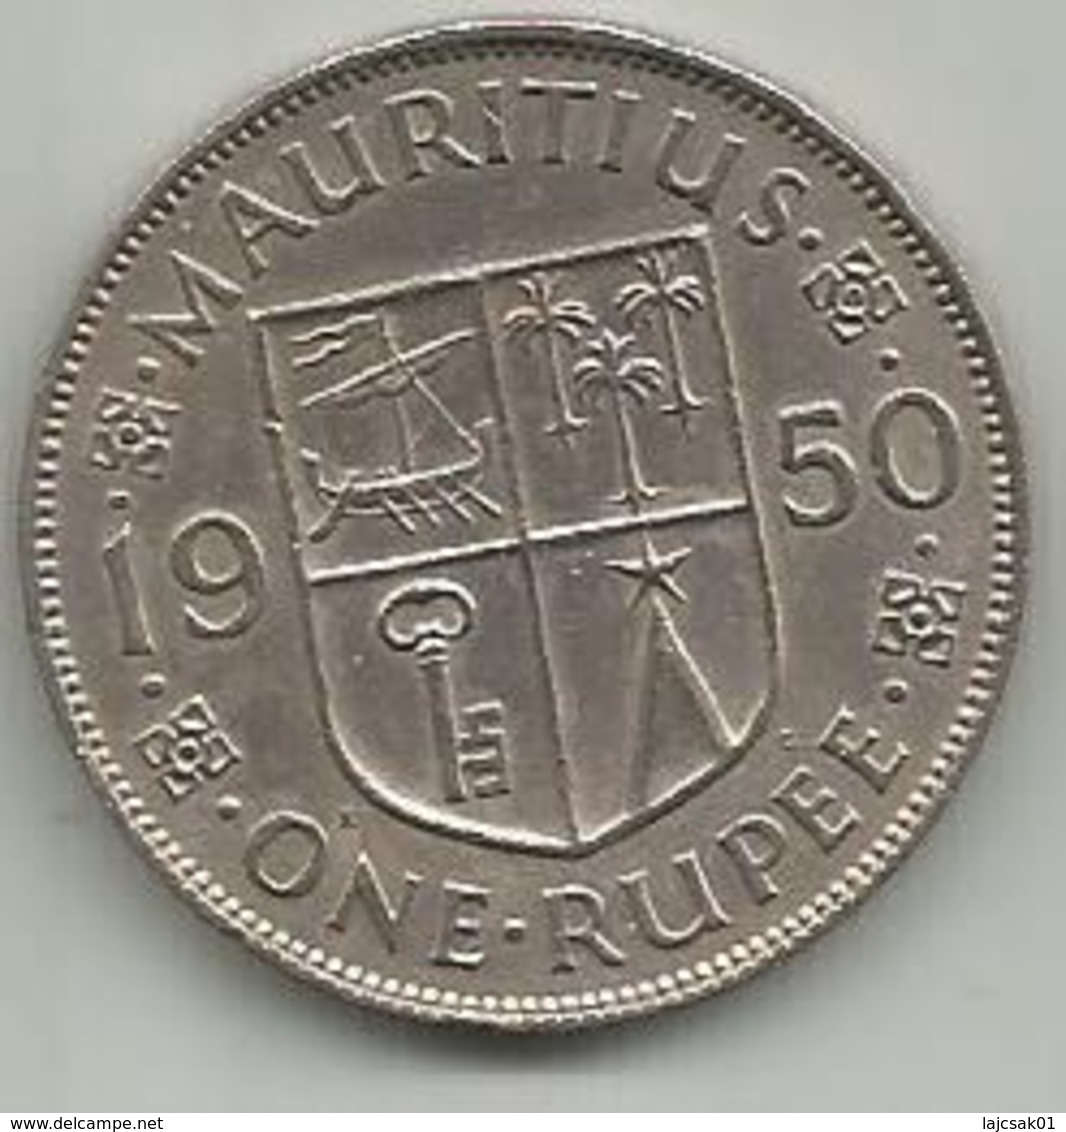 Mauritius 1 Rupee 1950. KM#29.1 - Mauritius